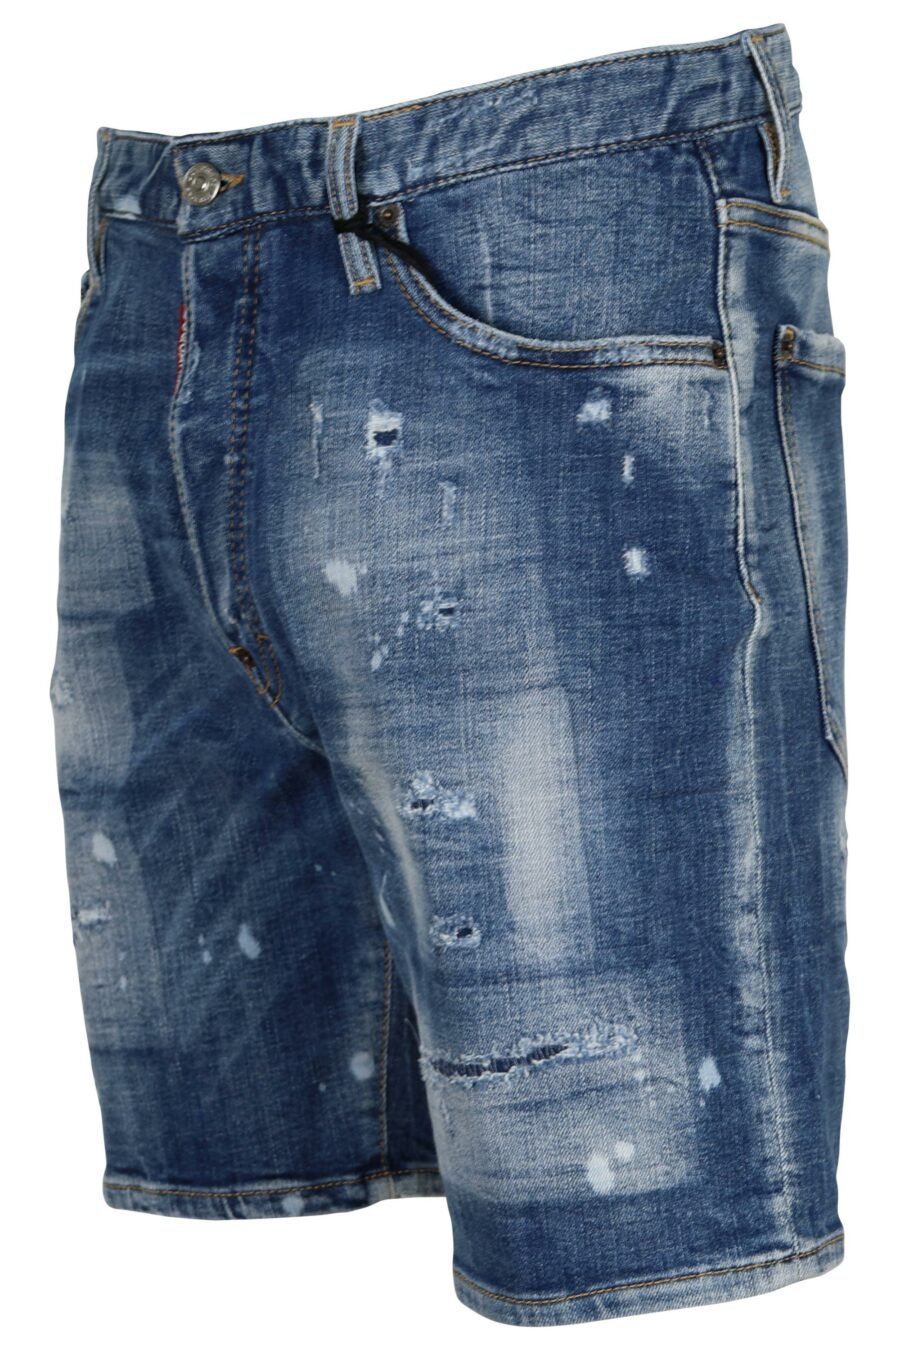 Light blue denim shorts "marine short" with rips and frayed - 8054148340193 1